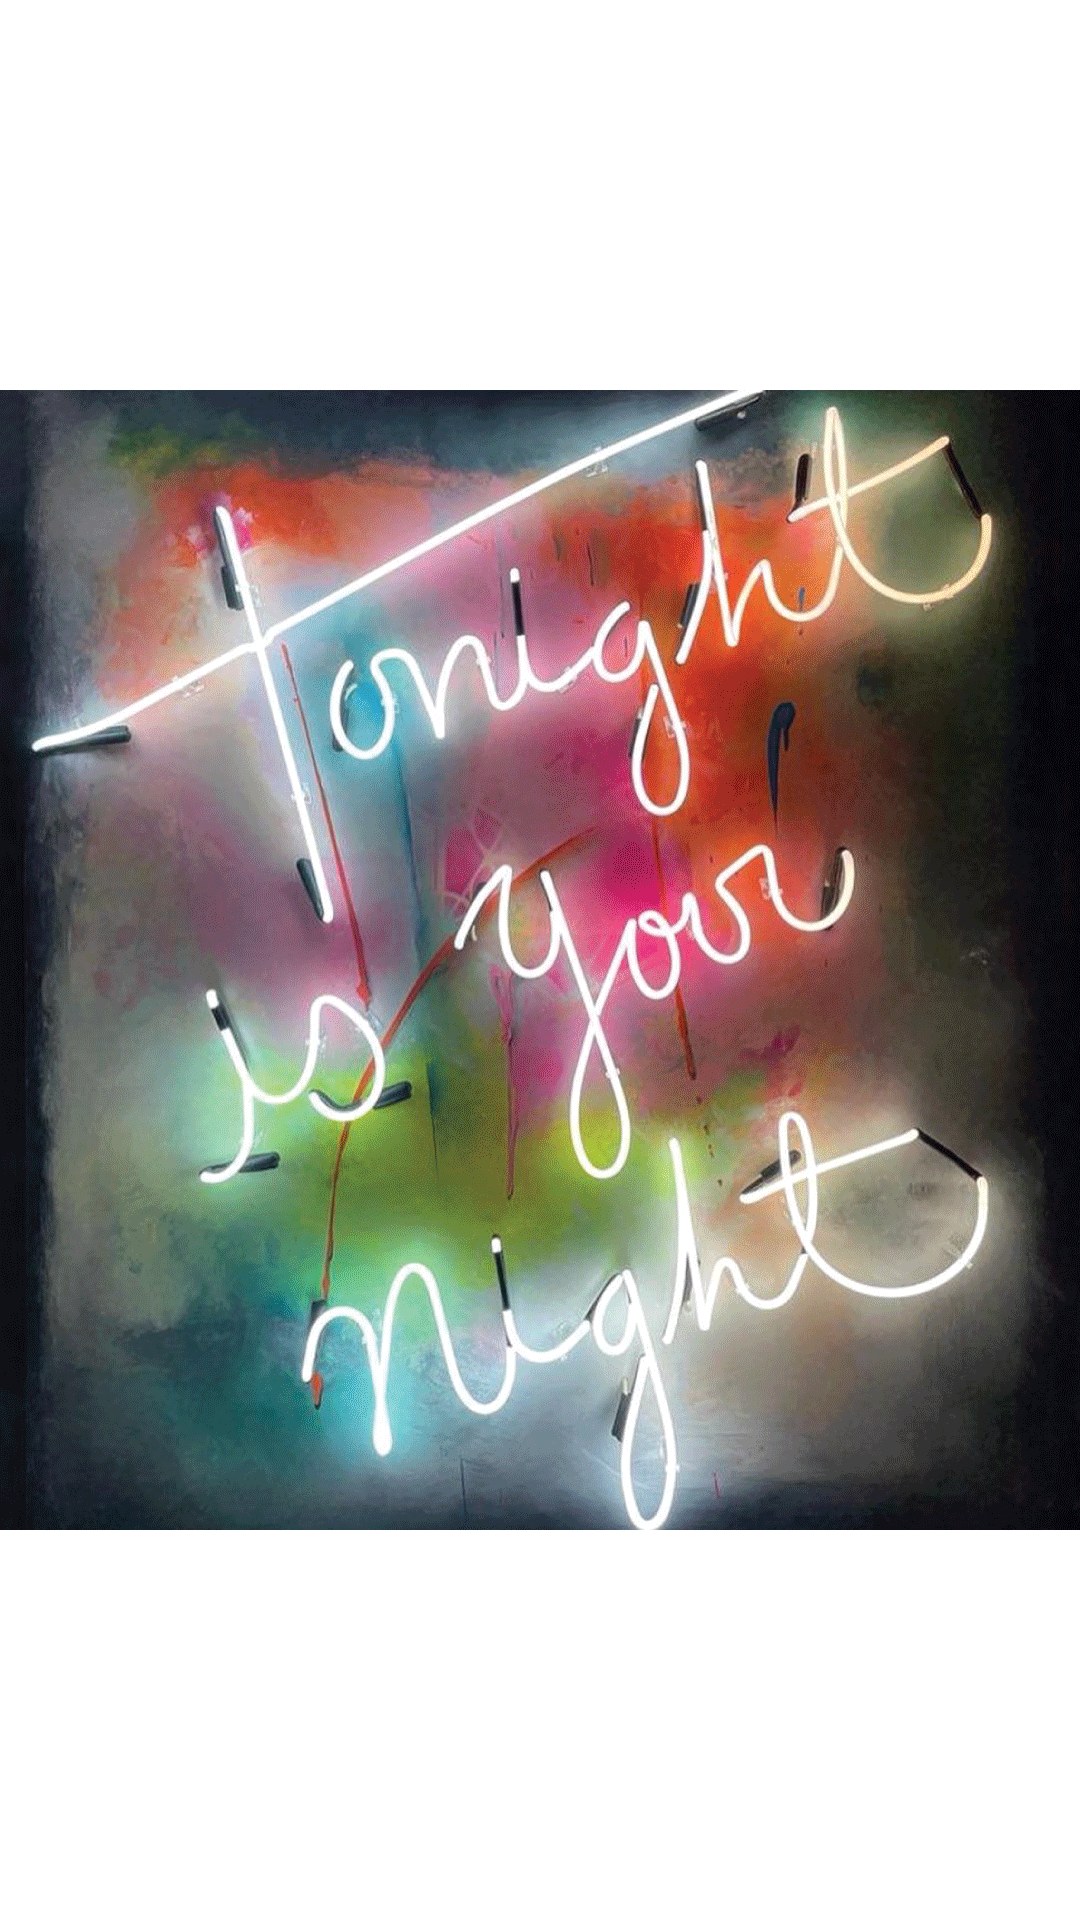 NEON "TONIGHT IS YOUR NIGHT"